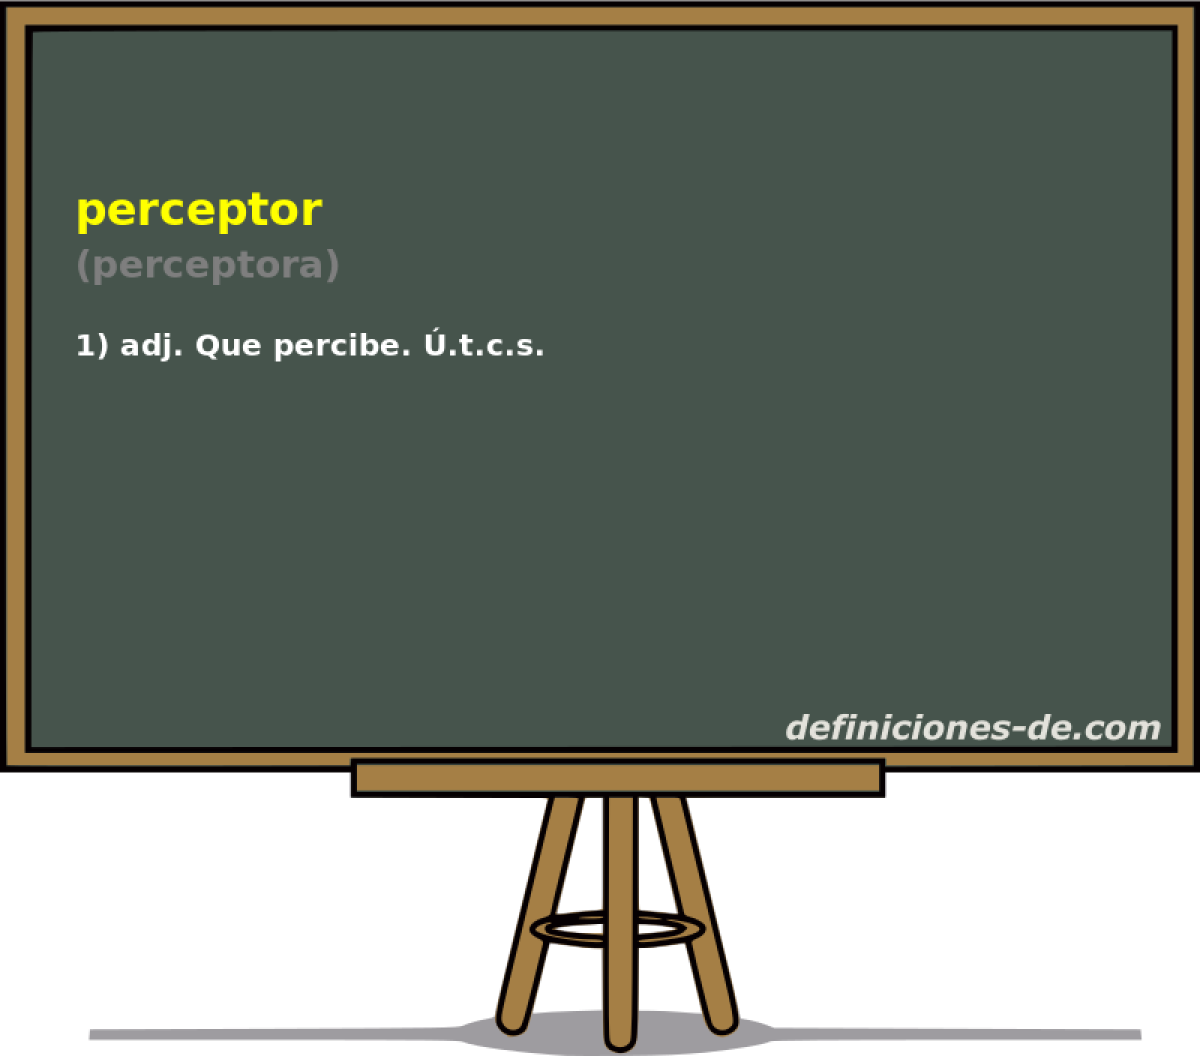 perceptor (perceptora)